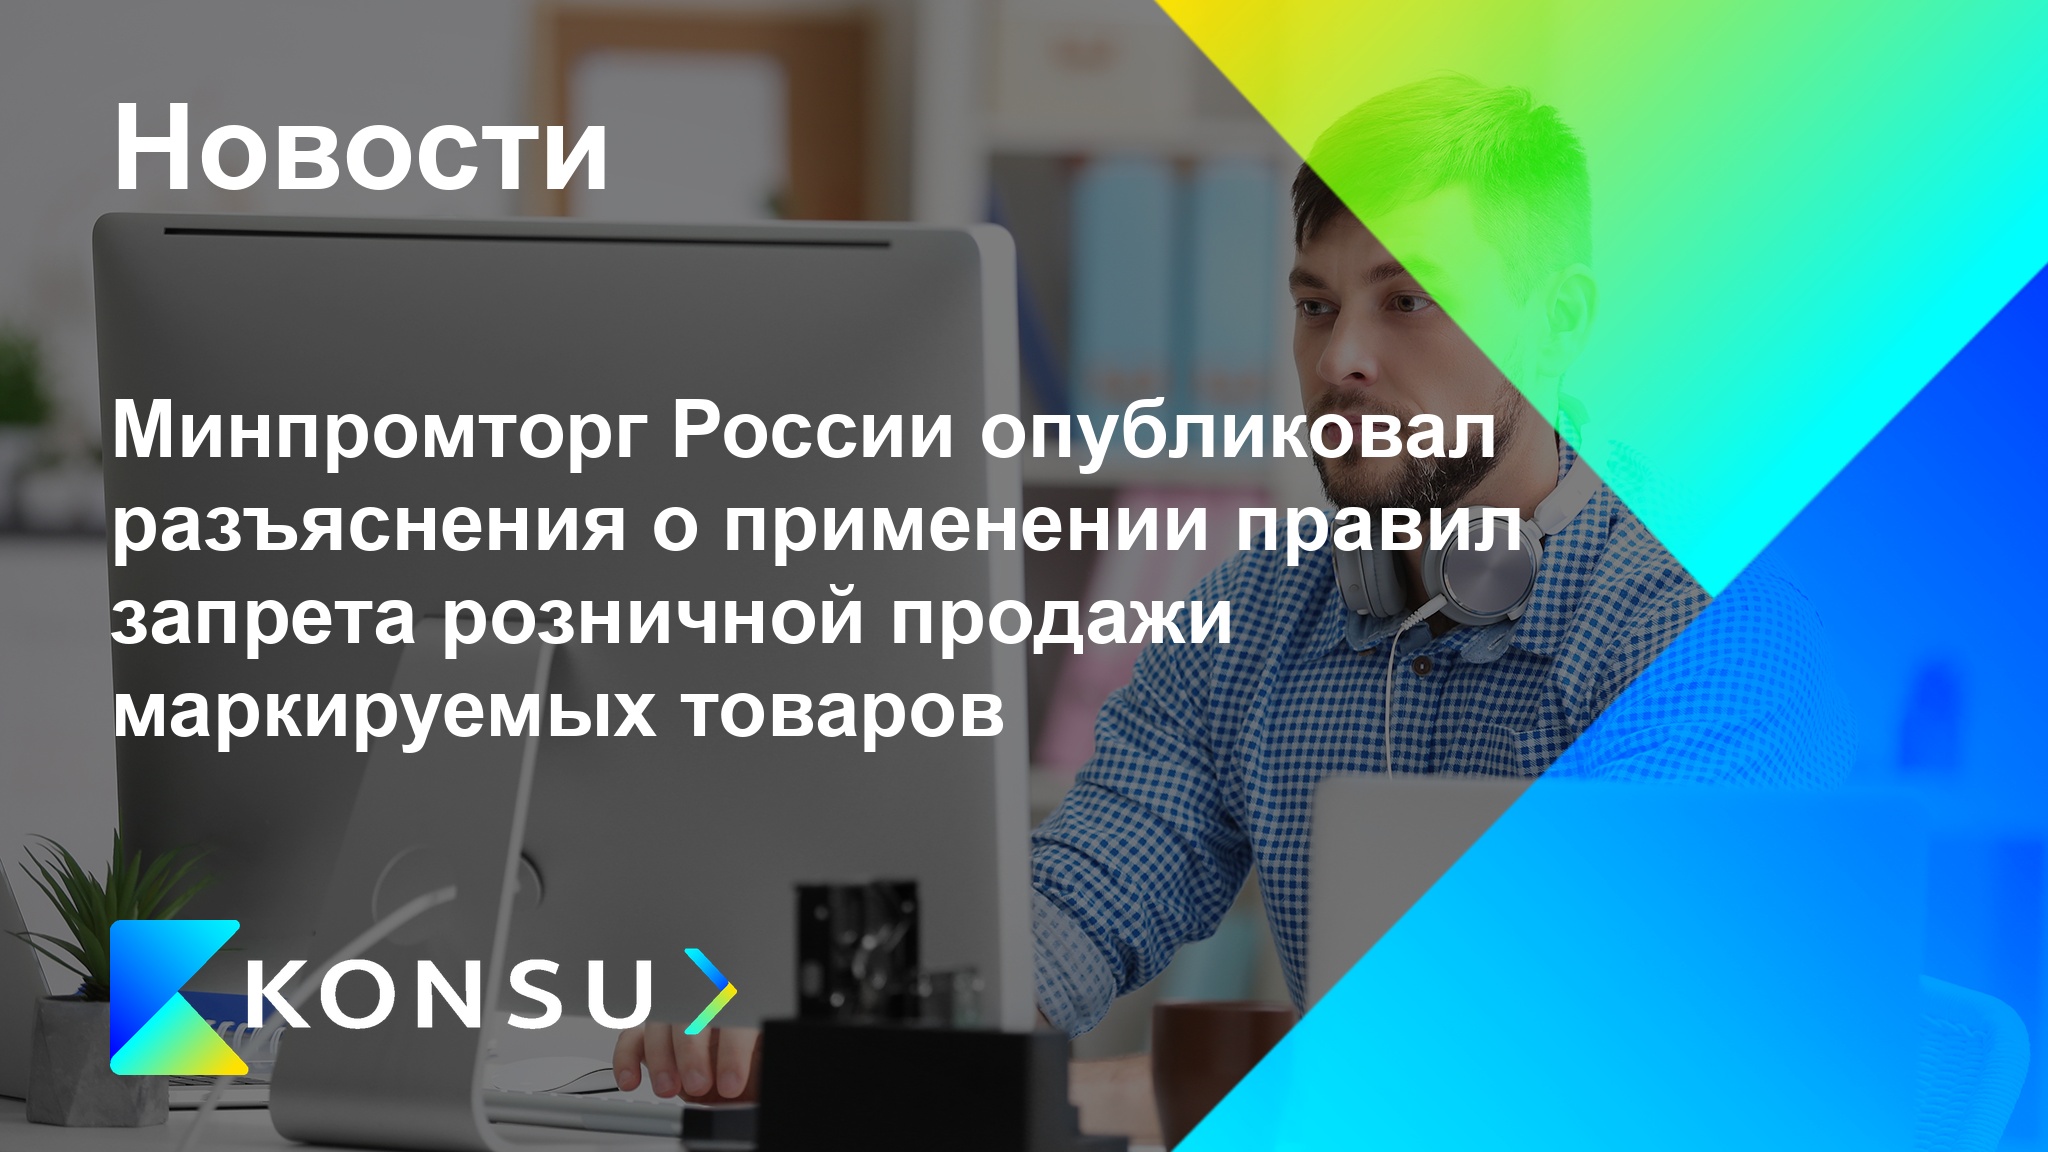 Minpromtorg rossii opublikoval razjasnenija ru konsu outsourcing